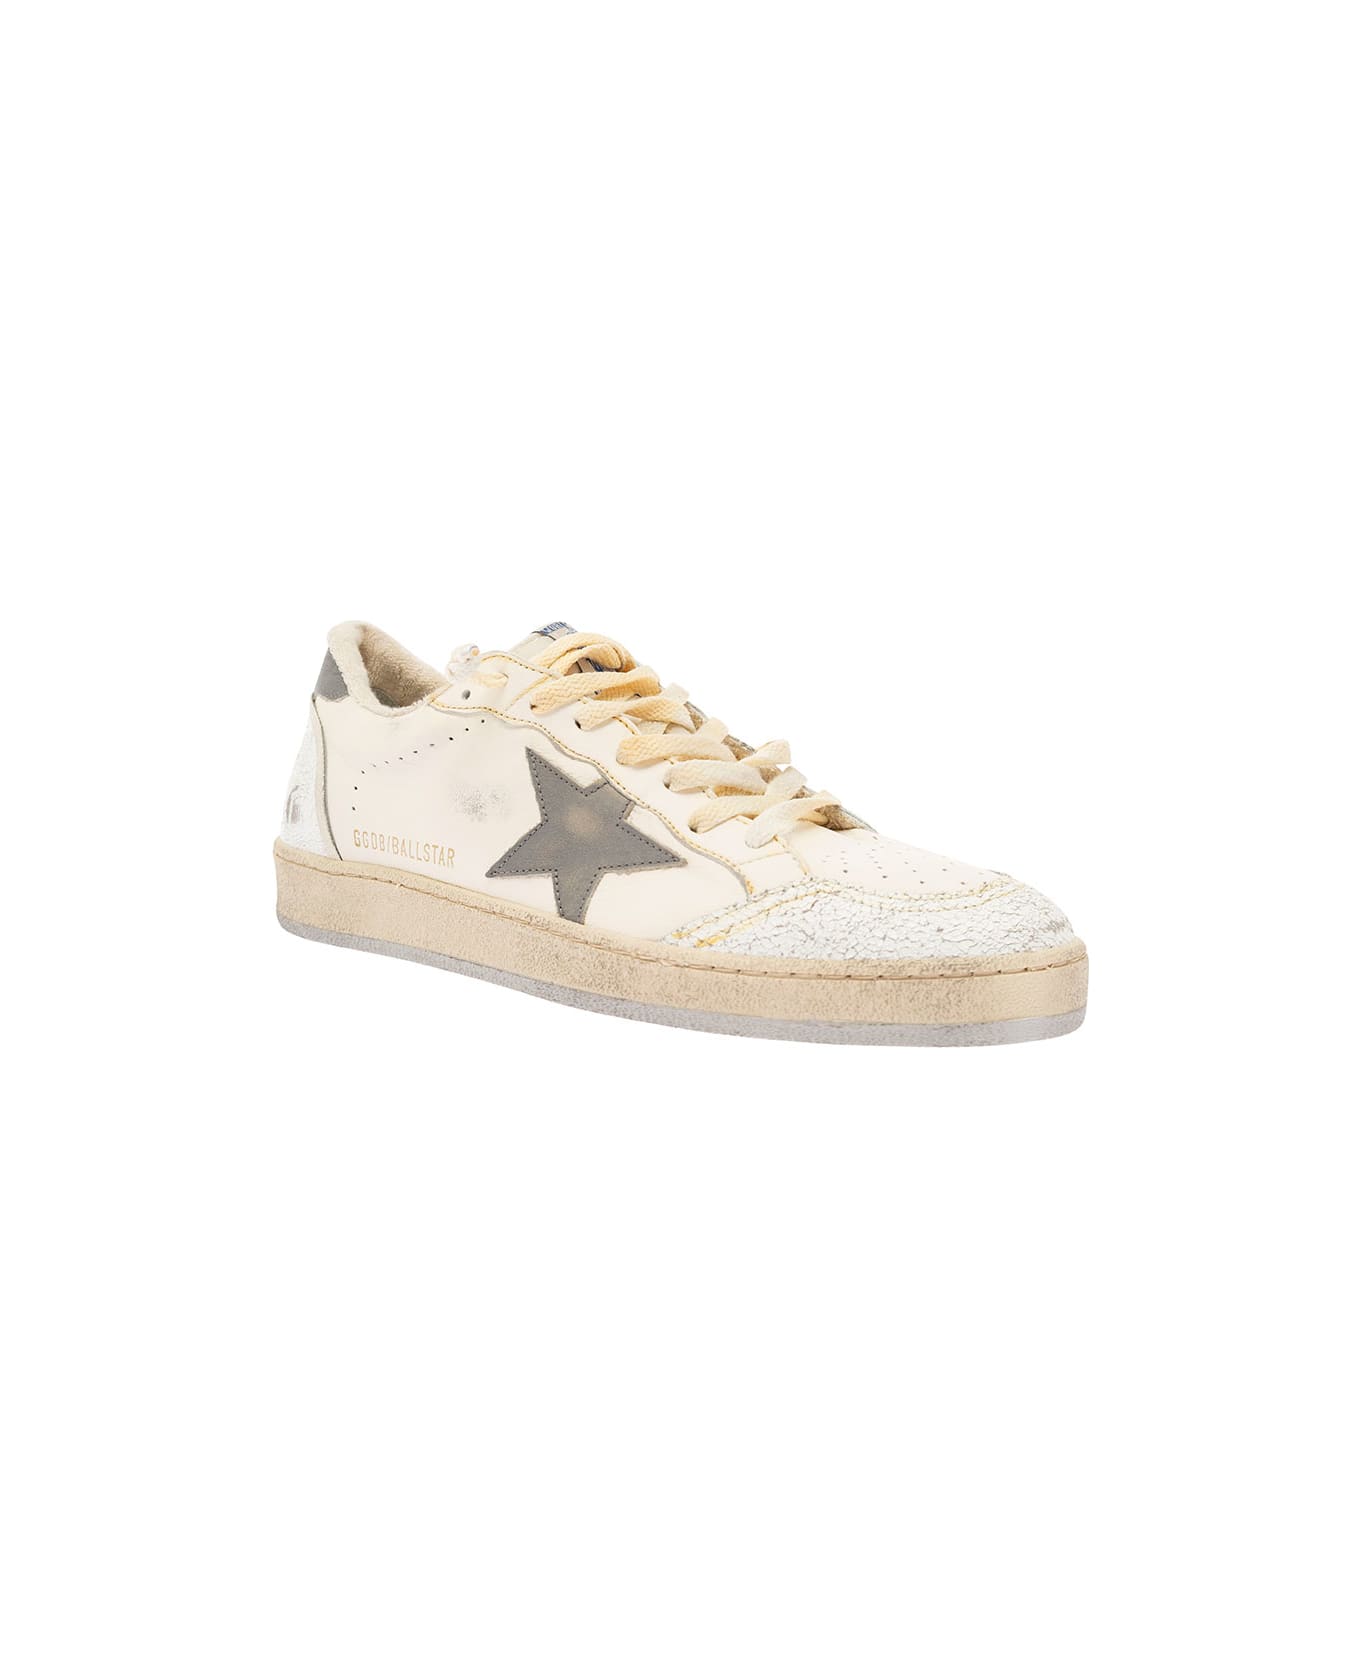 Golden Goose Ball Star Sneakers - White/Grey